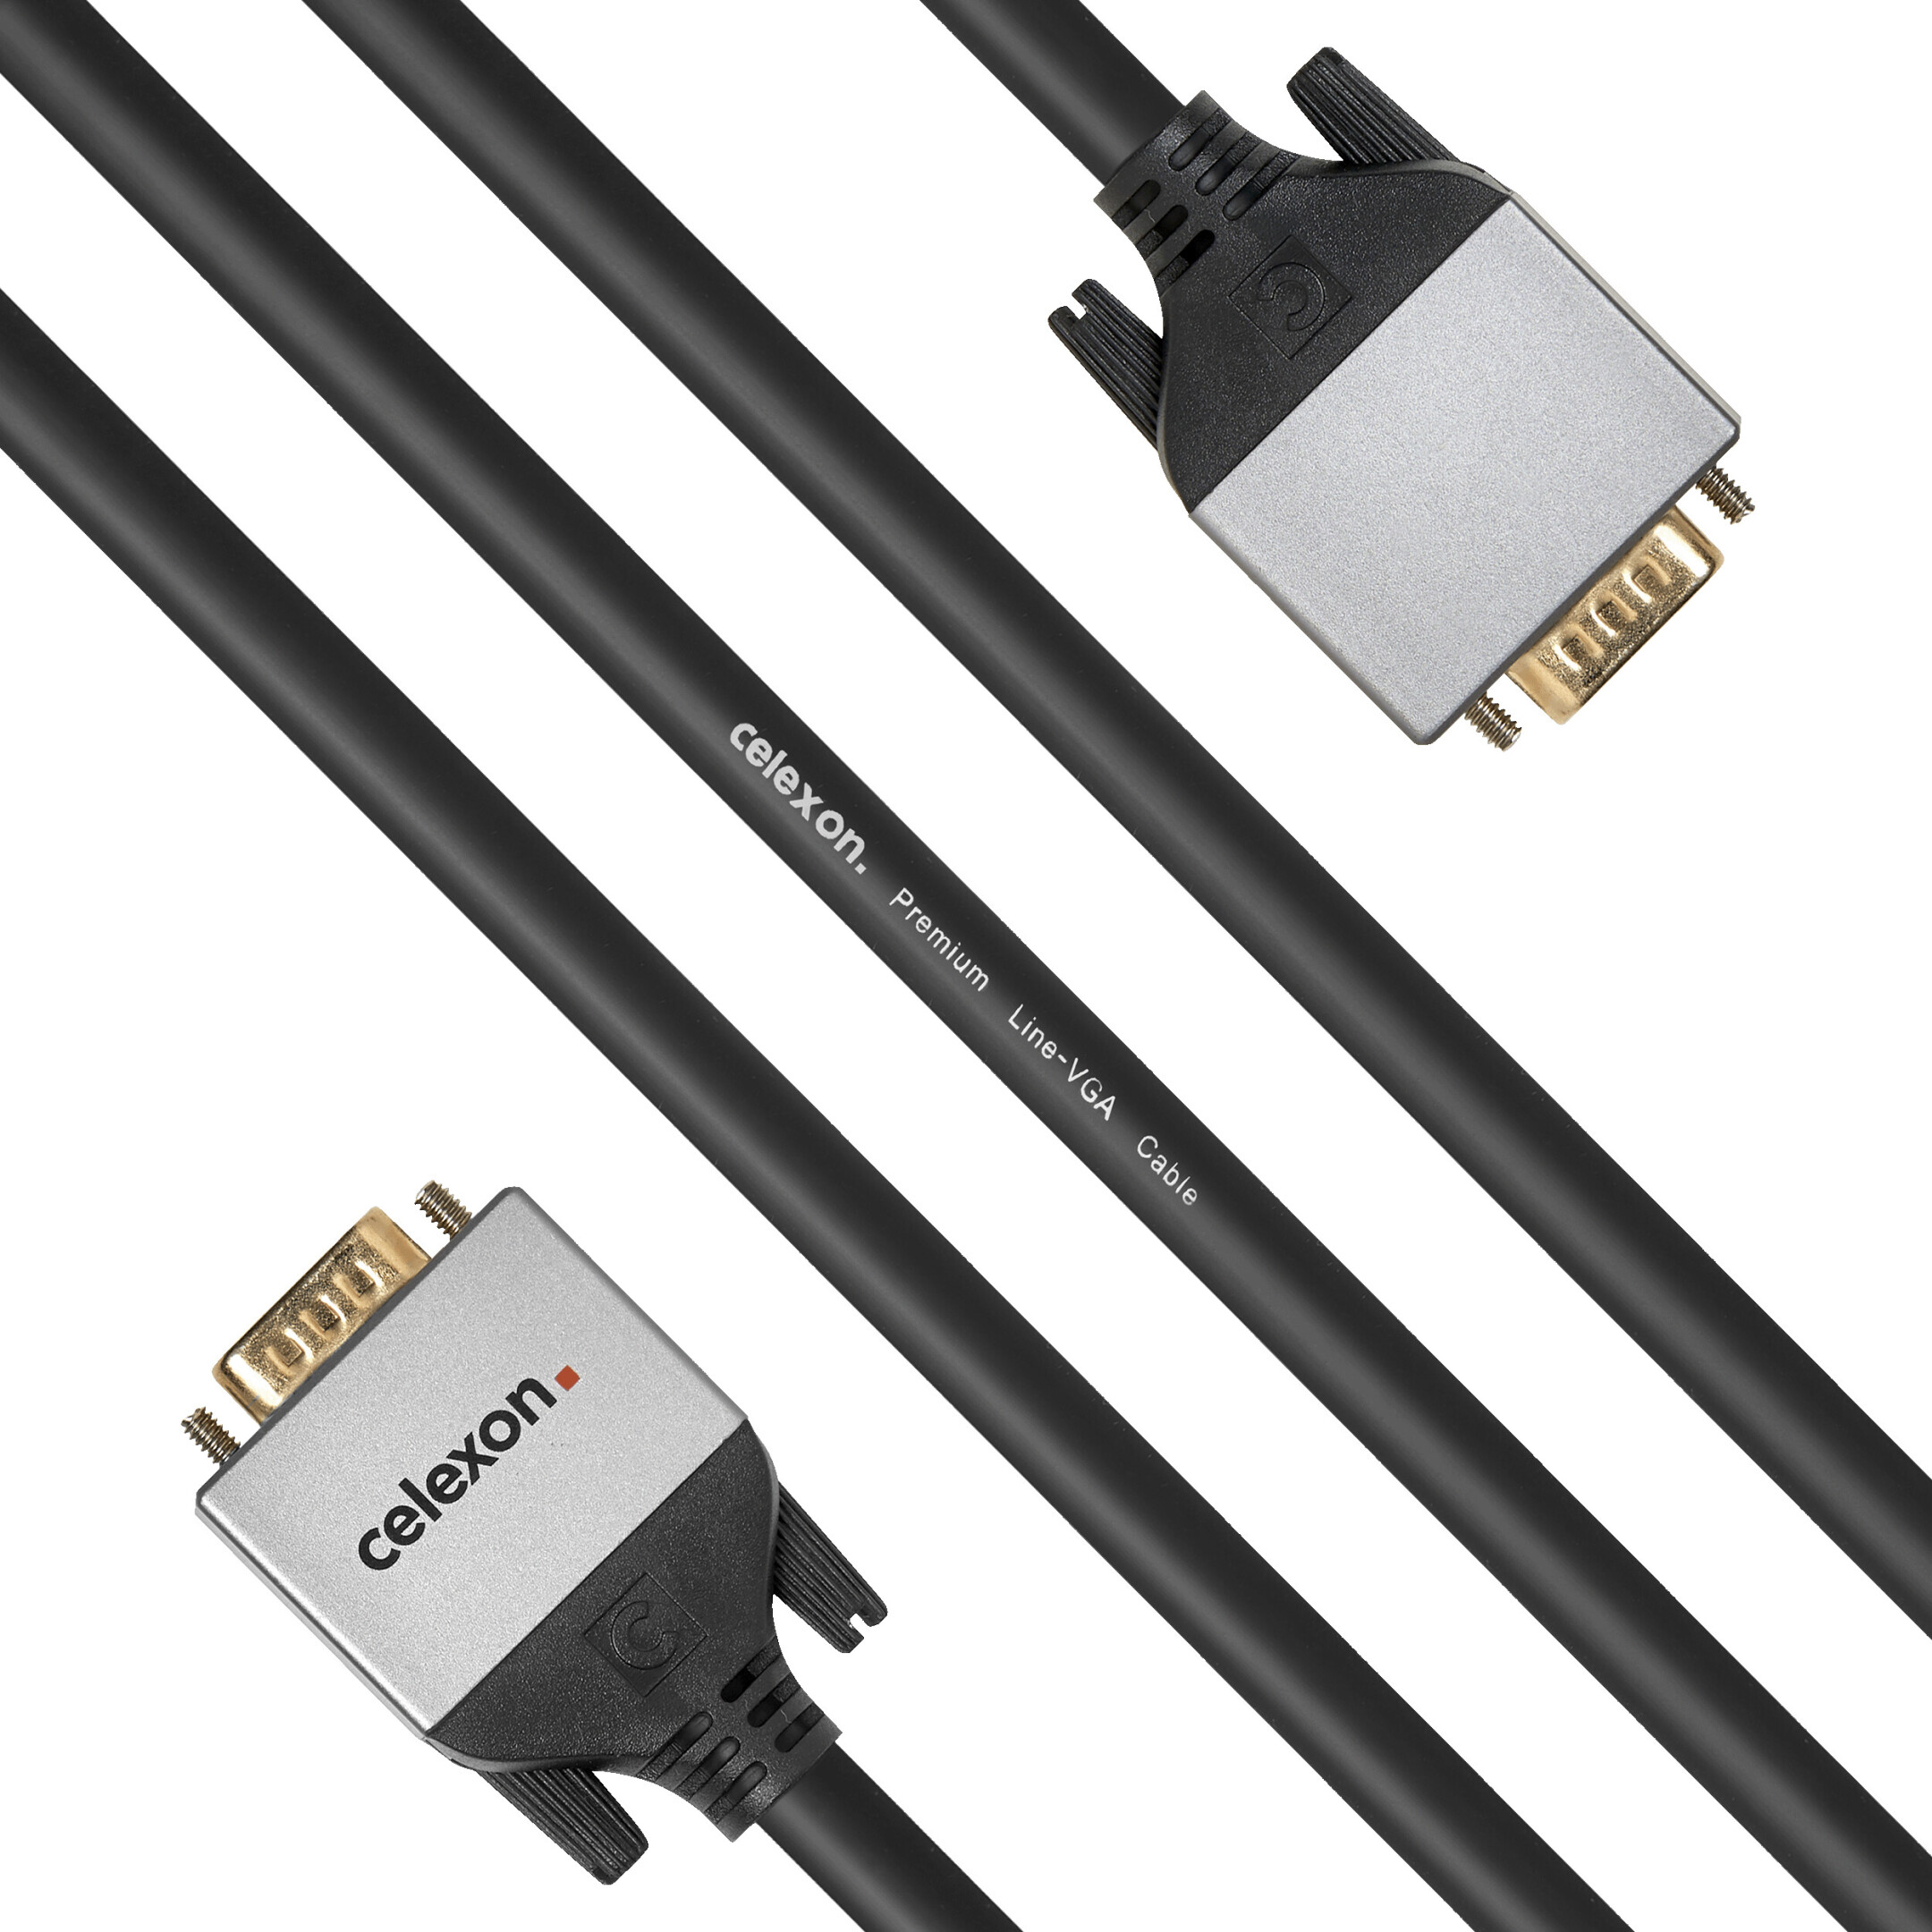 celexon-VGA-Kabel-10-0m-Professional-Line